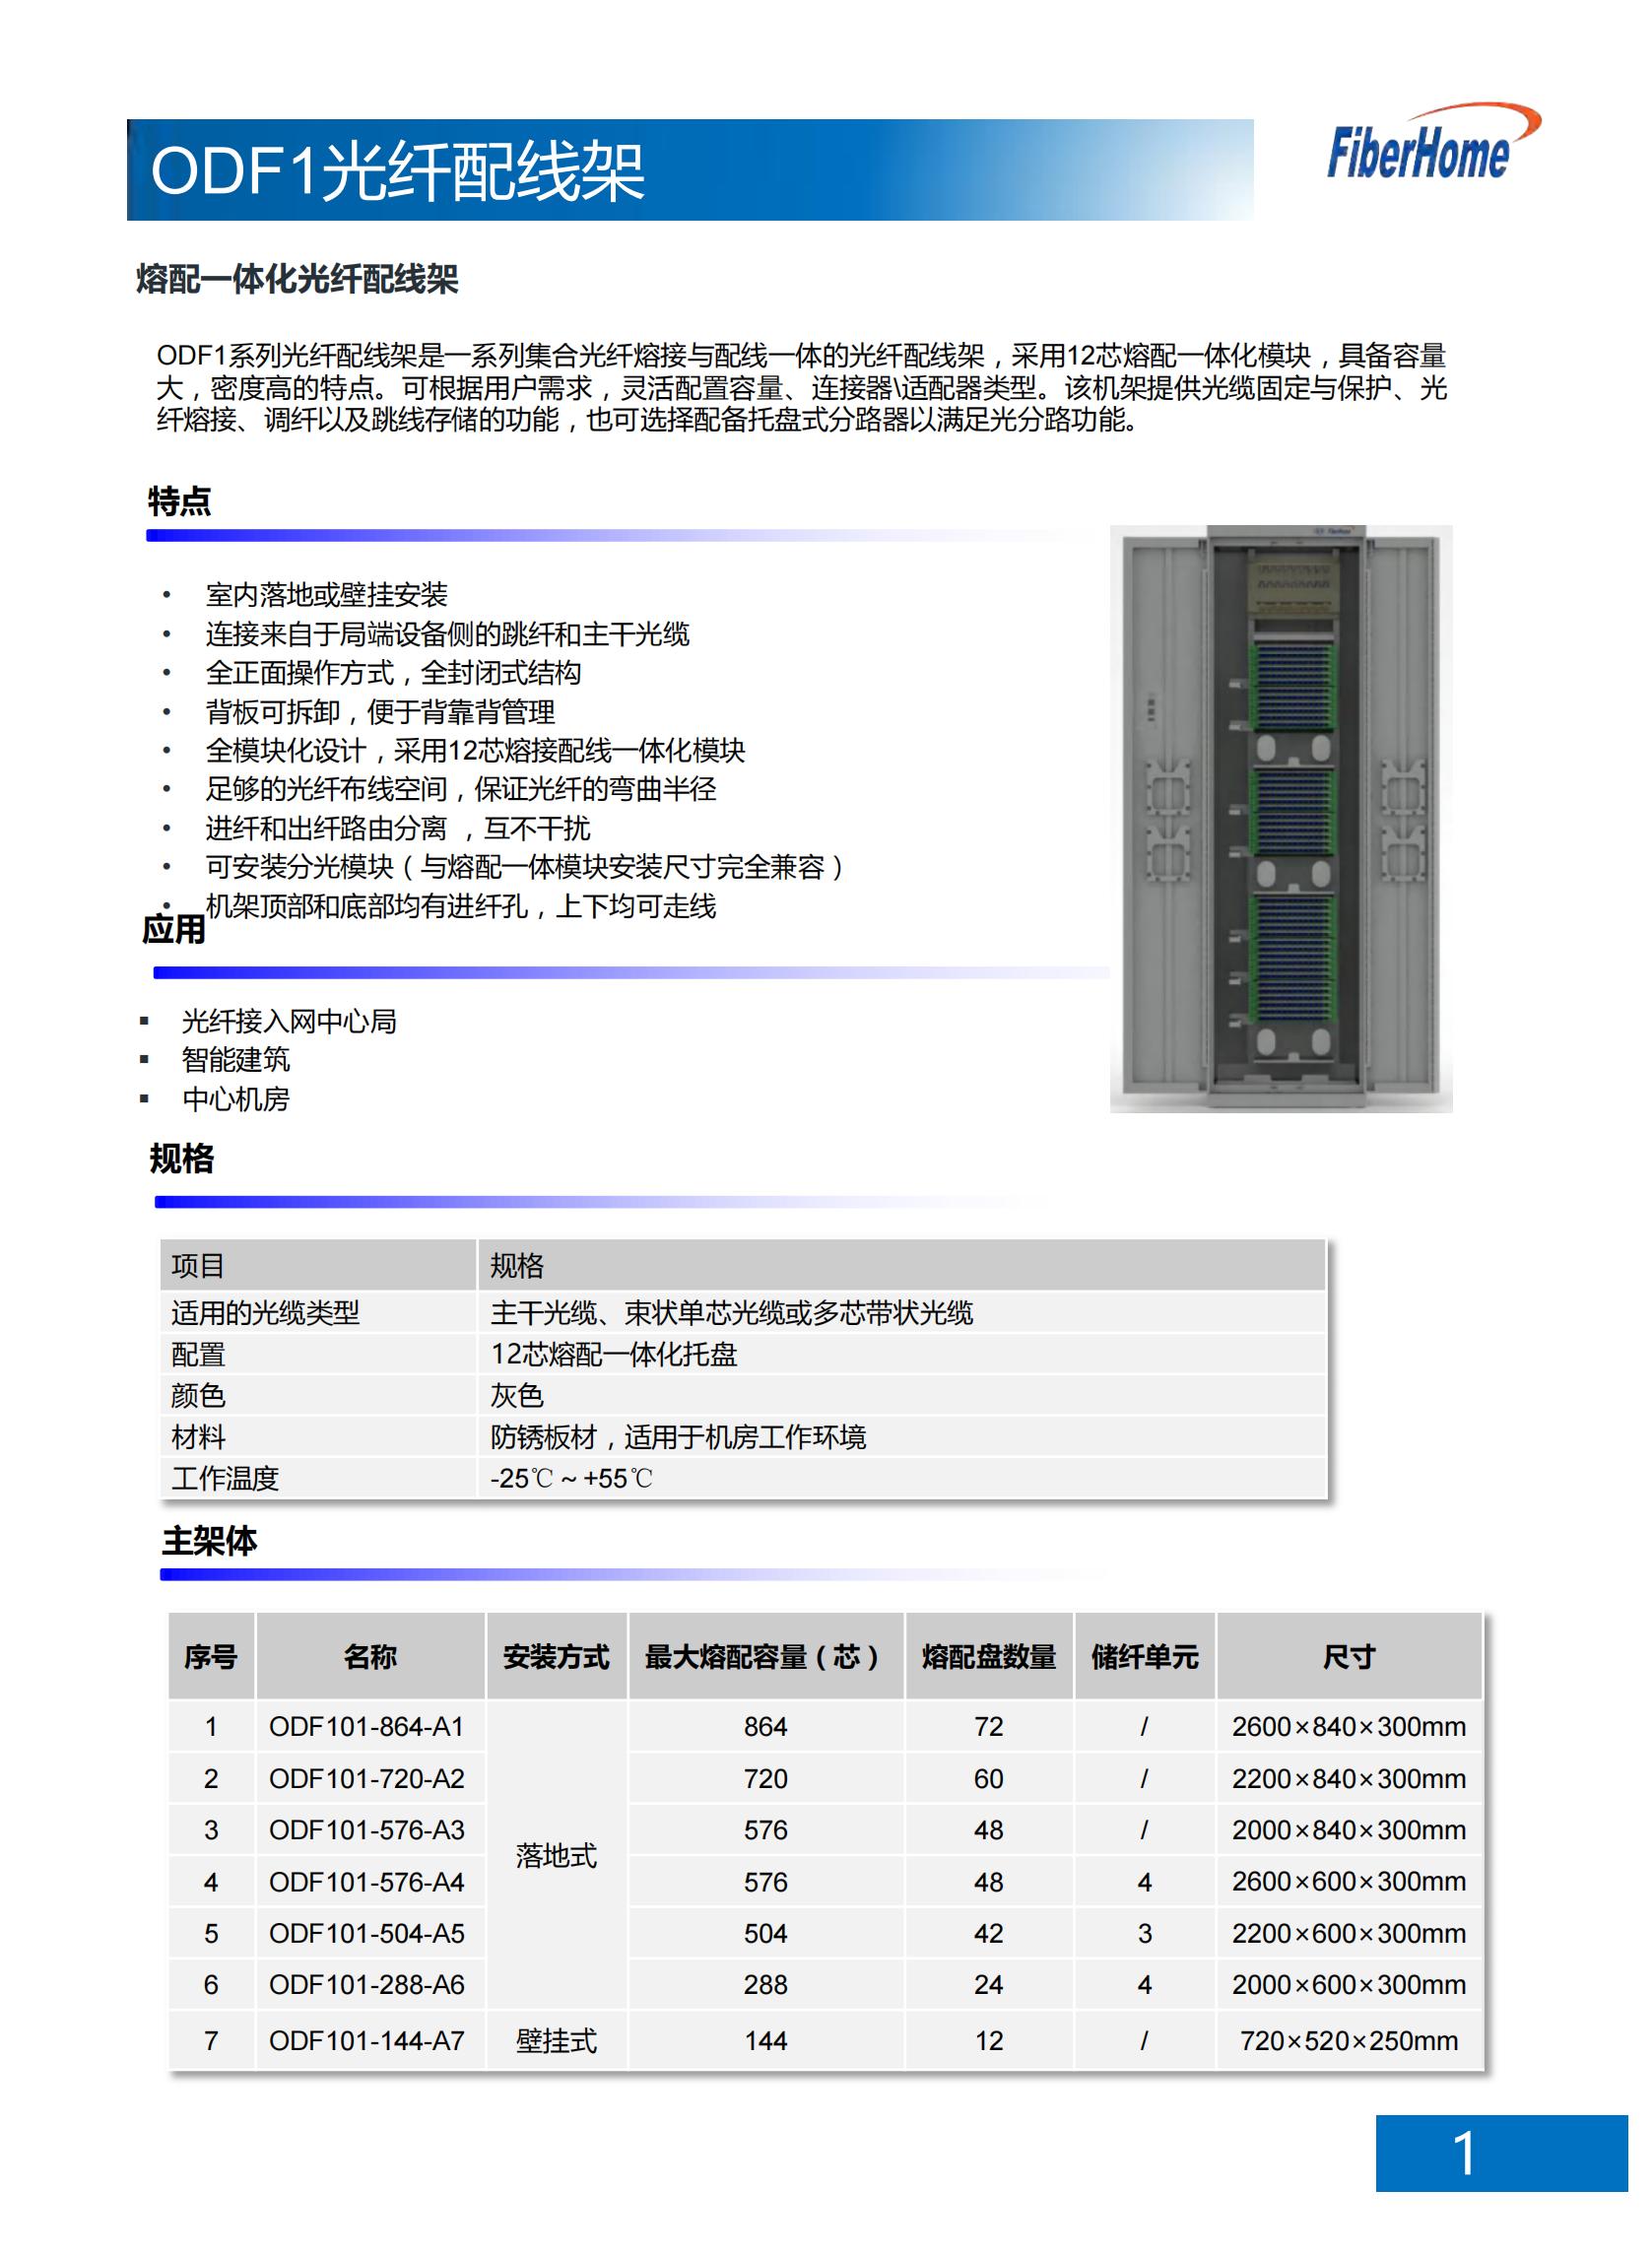 ODF101-288-A6 ODF光纤配线架 （288芯落地式 无子框型 不带熔纤盘）